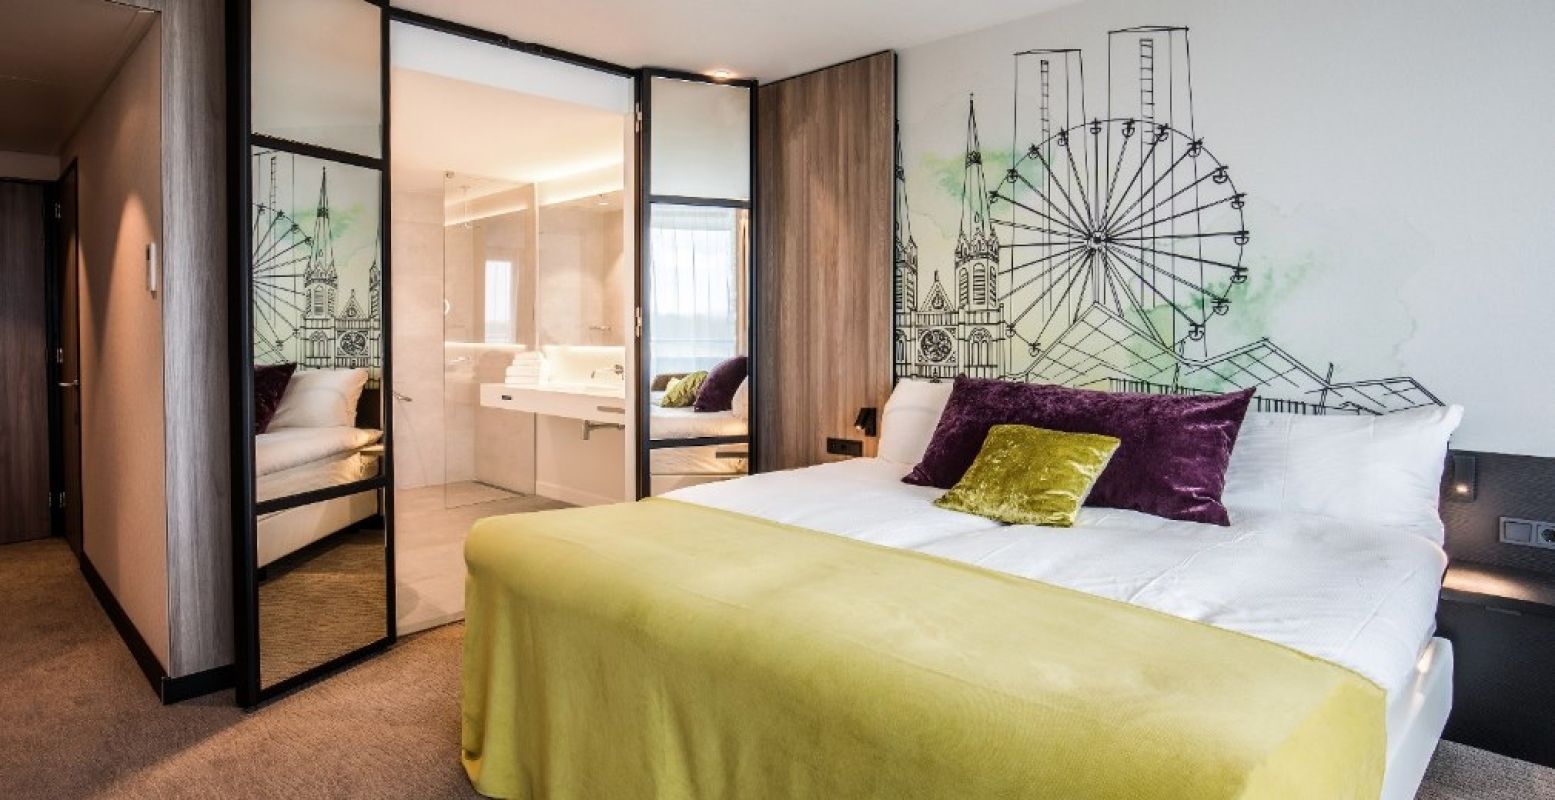 Blijf lekker slapen in Van der Valk Hotel Tilburg. Foto: Van der Valk